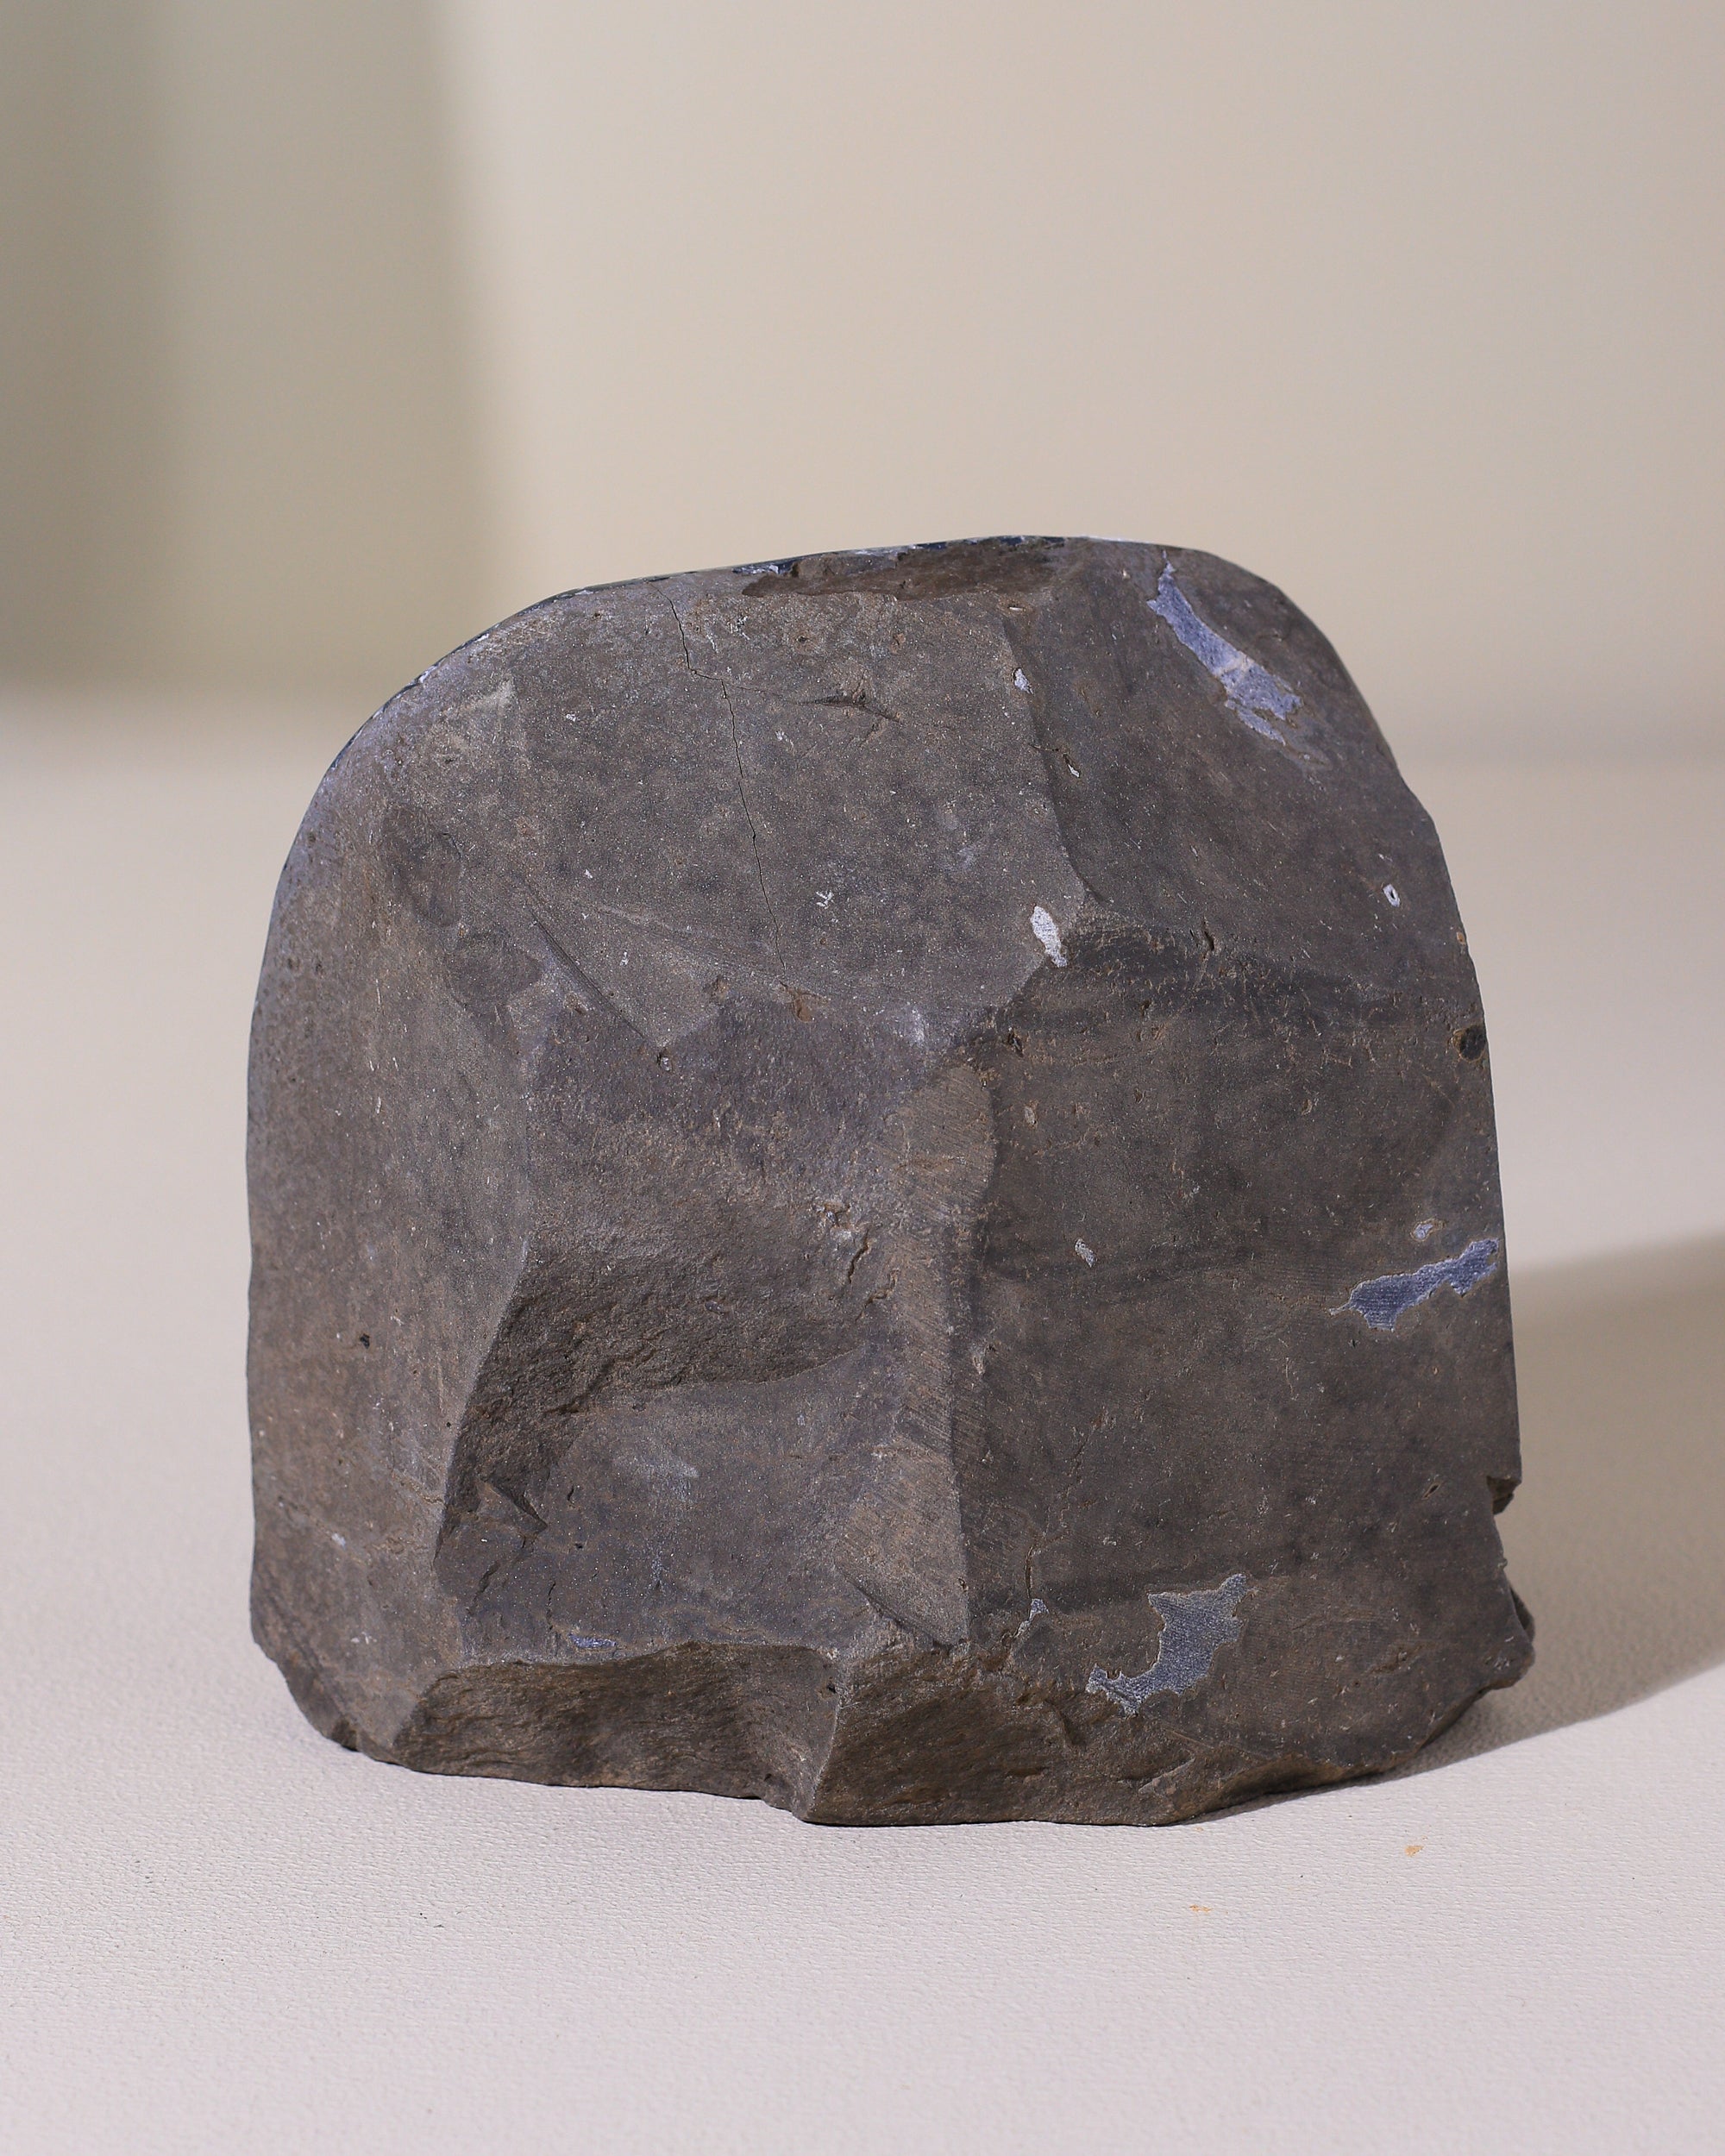 großer Amethyst Kristall, Einzelstück